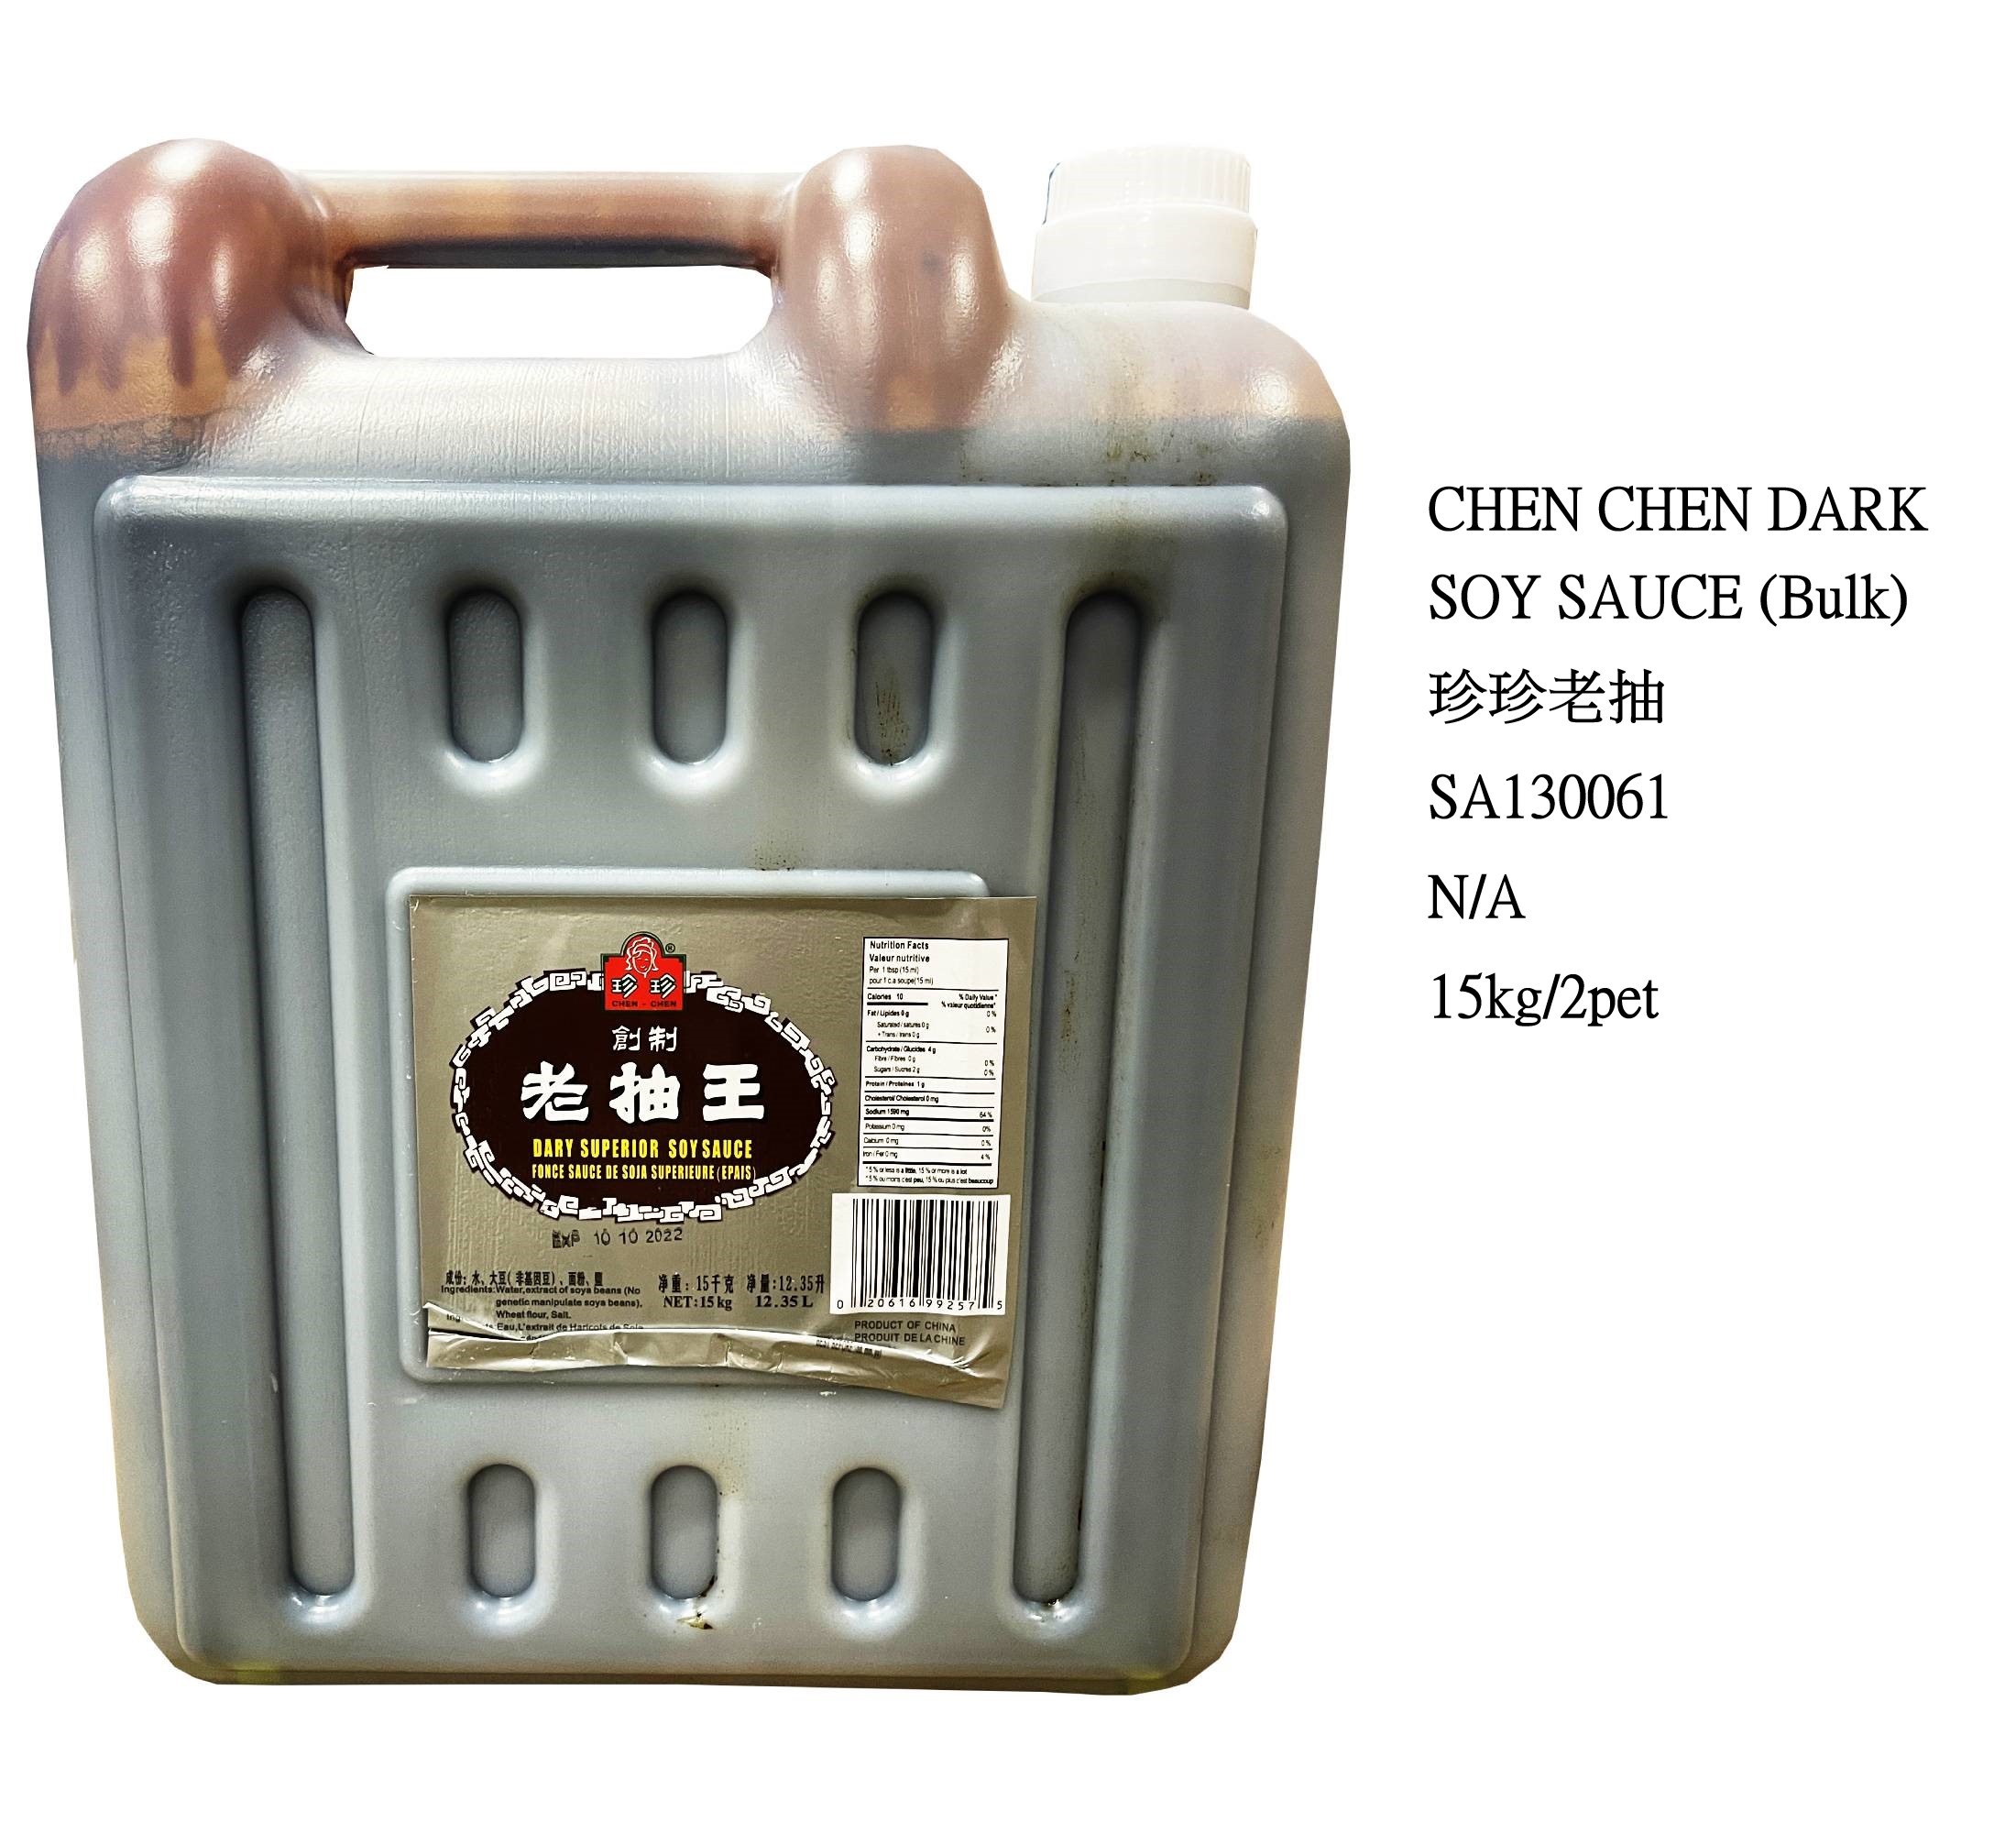 CHEN CHEN DARK SOY SAUCE SA130061